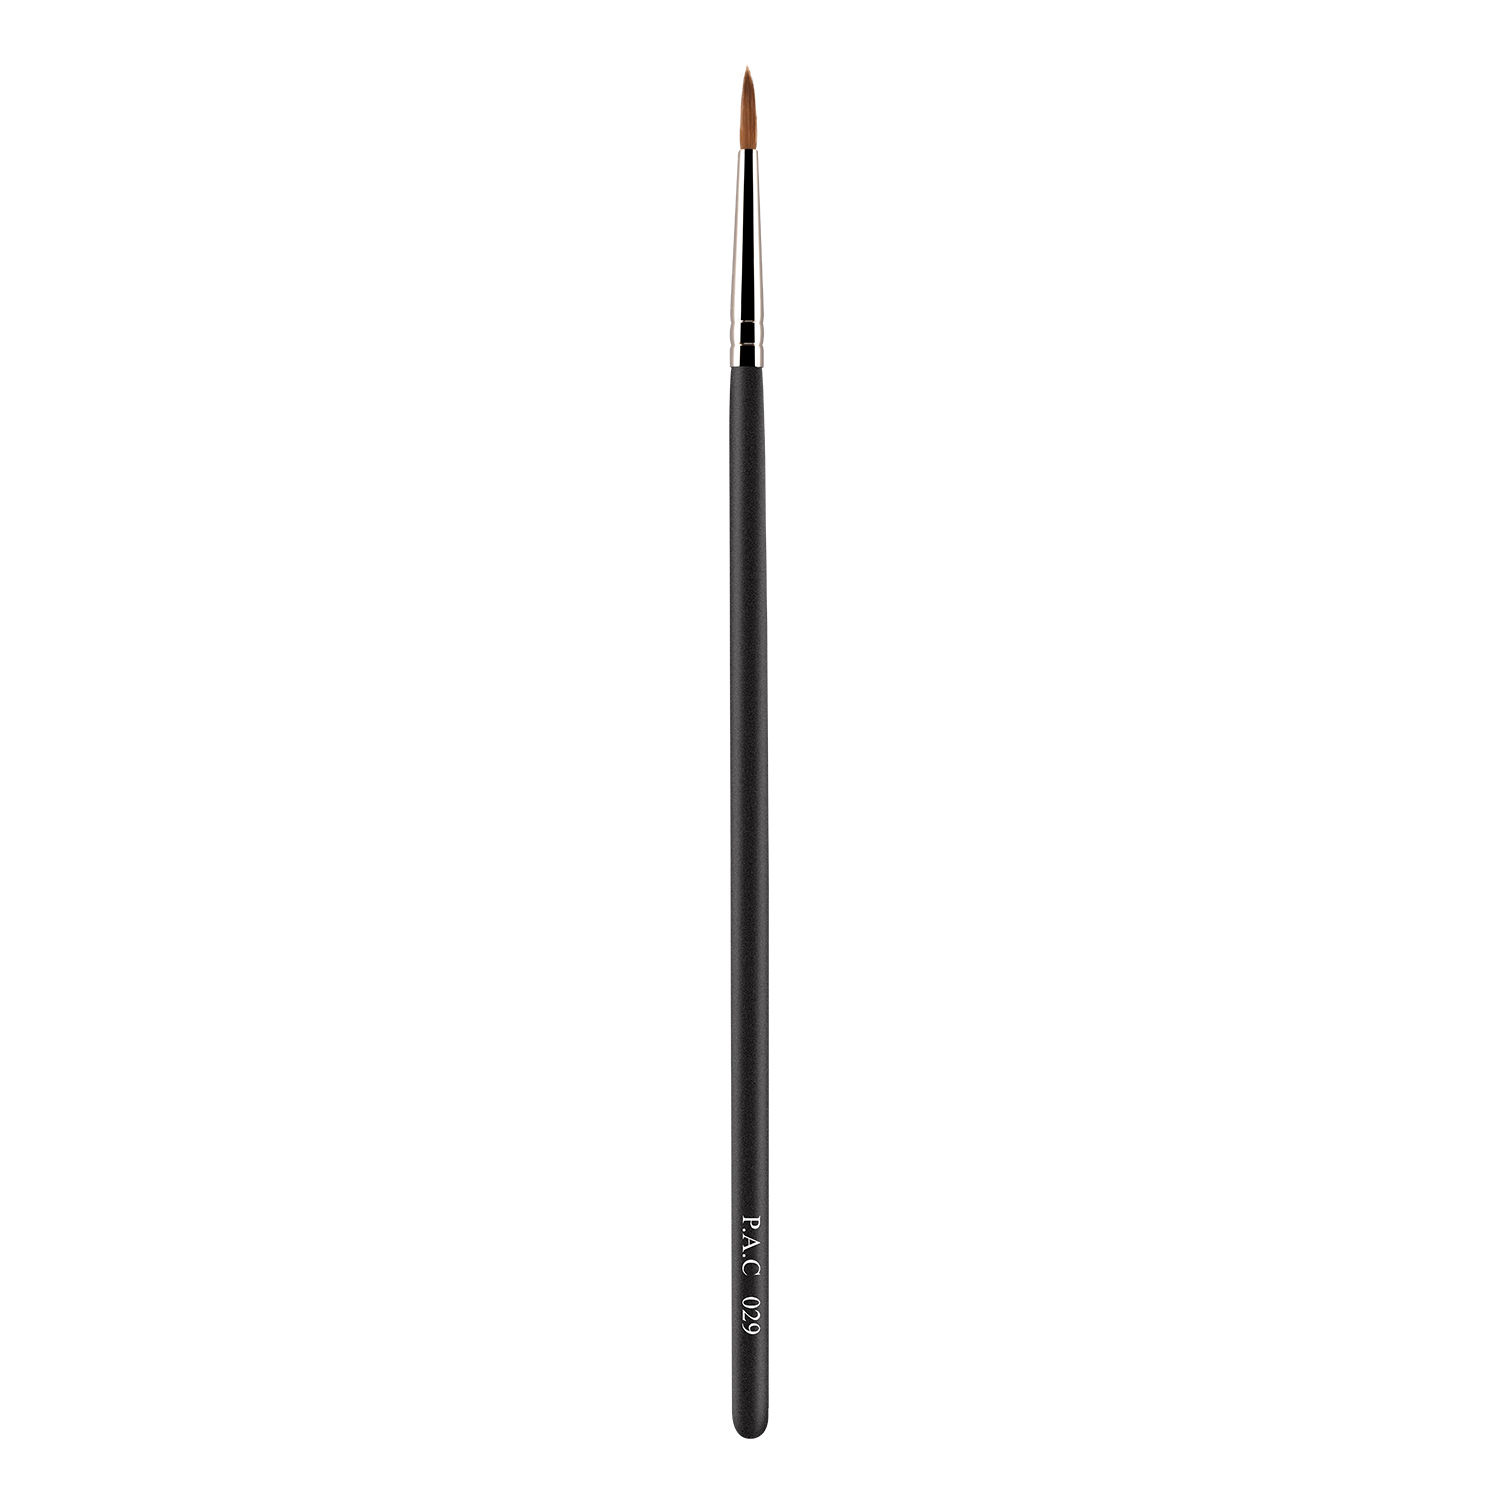 PAC Eyeliner Brush - 029